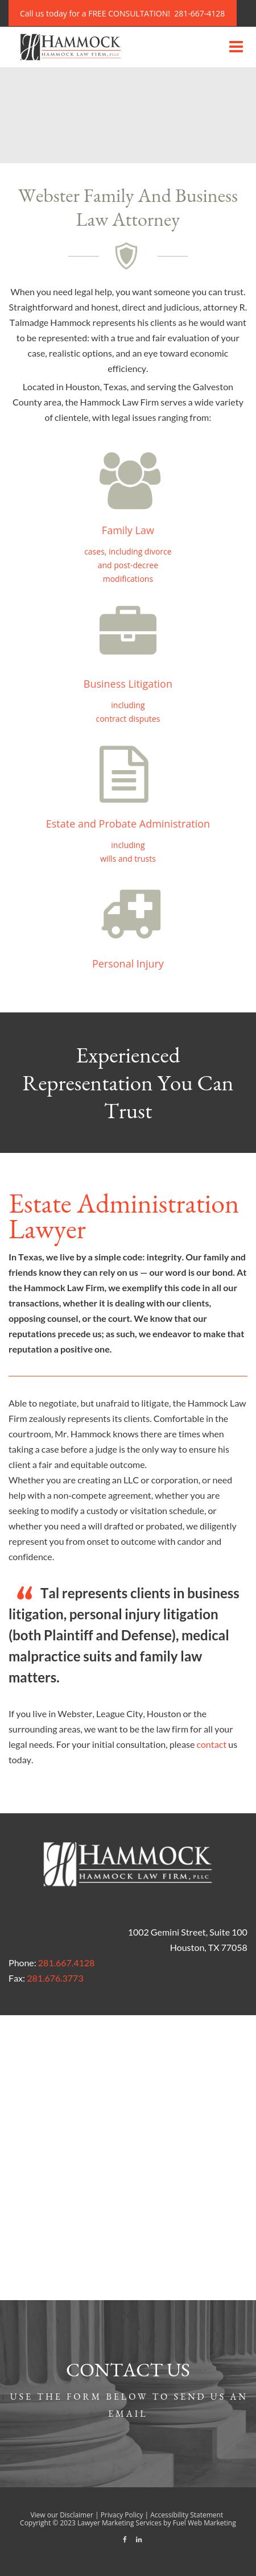 Hammock Law Firm - Houston TX Lawyers